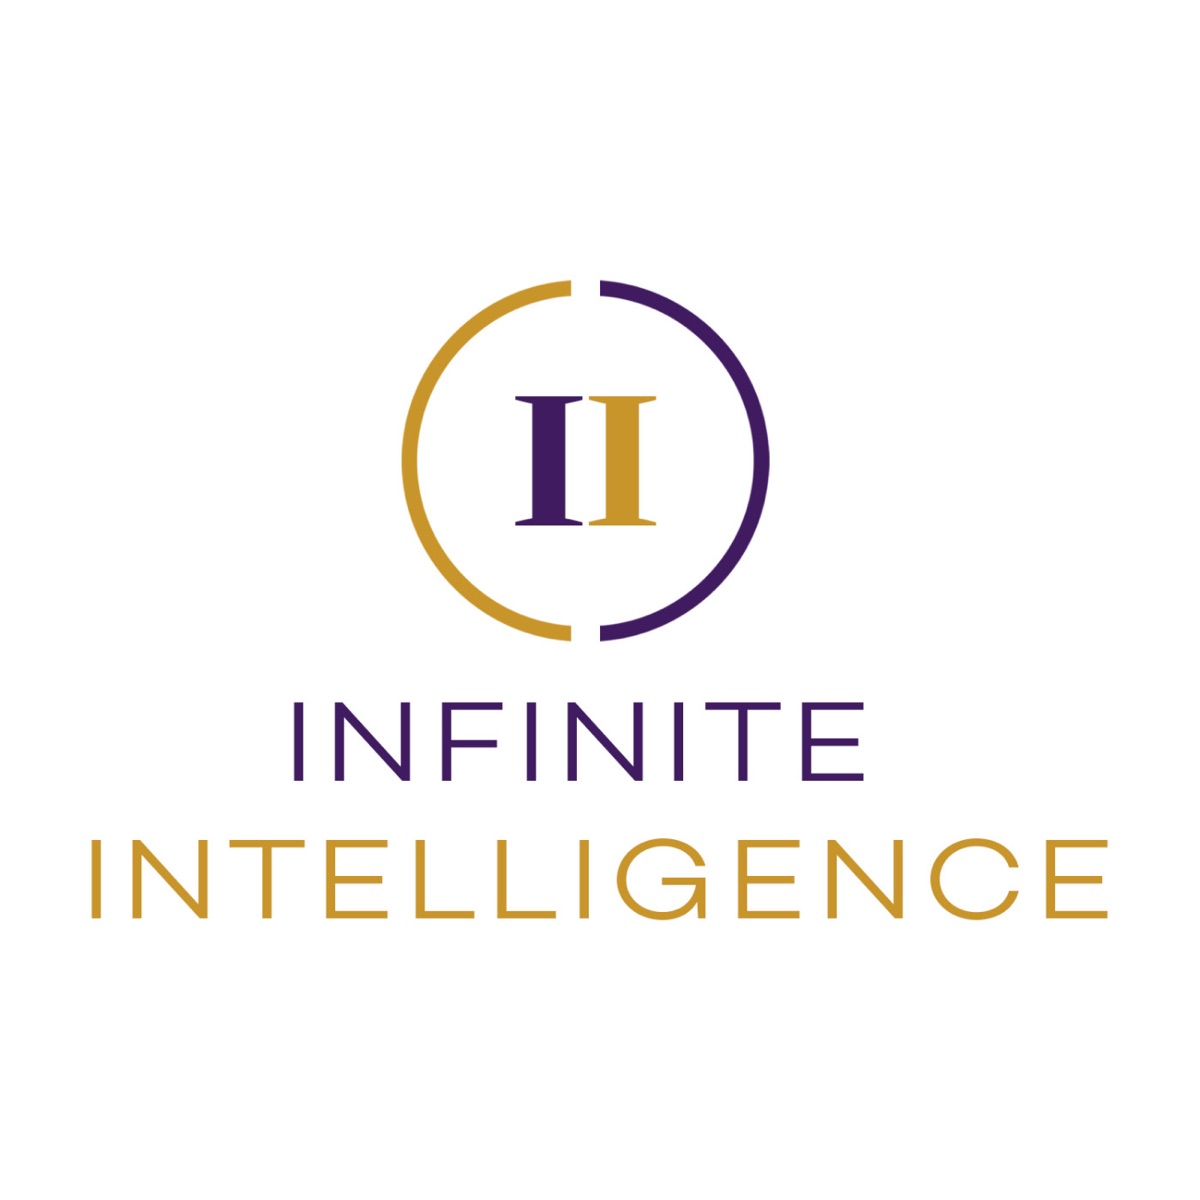 Abraham Hicks - Infinite Intelligence